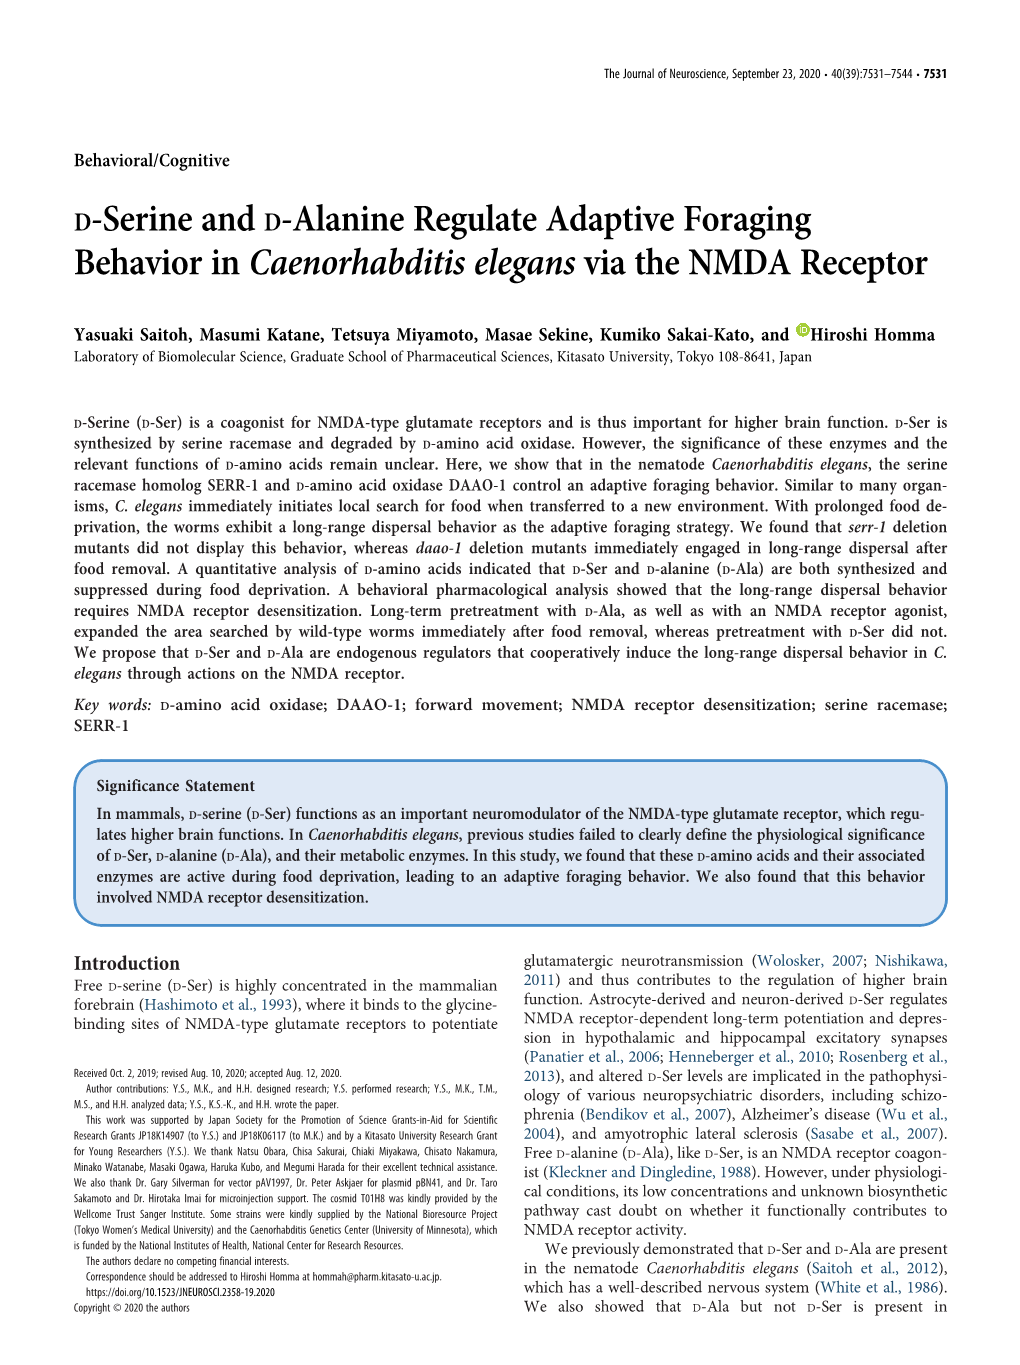 D-Serine and D-Alanine Regulate Adaptive Foraging Behavior in Caenorhabditis Elegans Via the NMDA Receptor